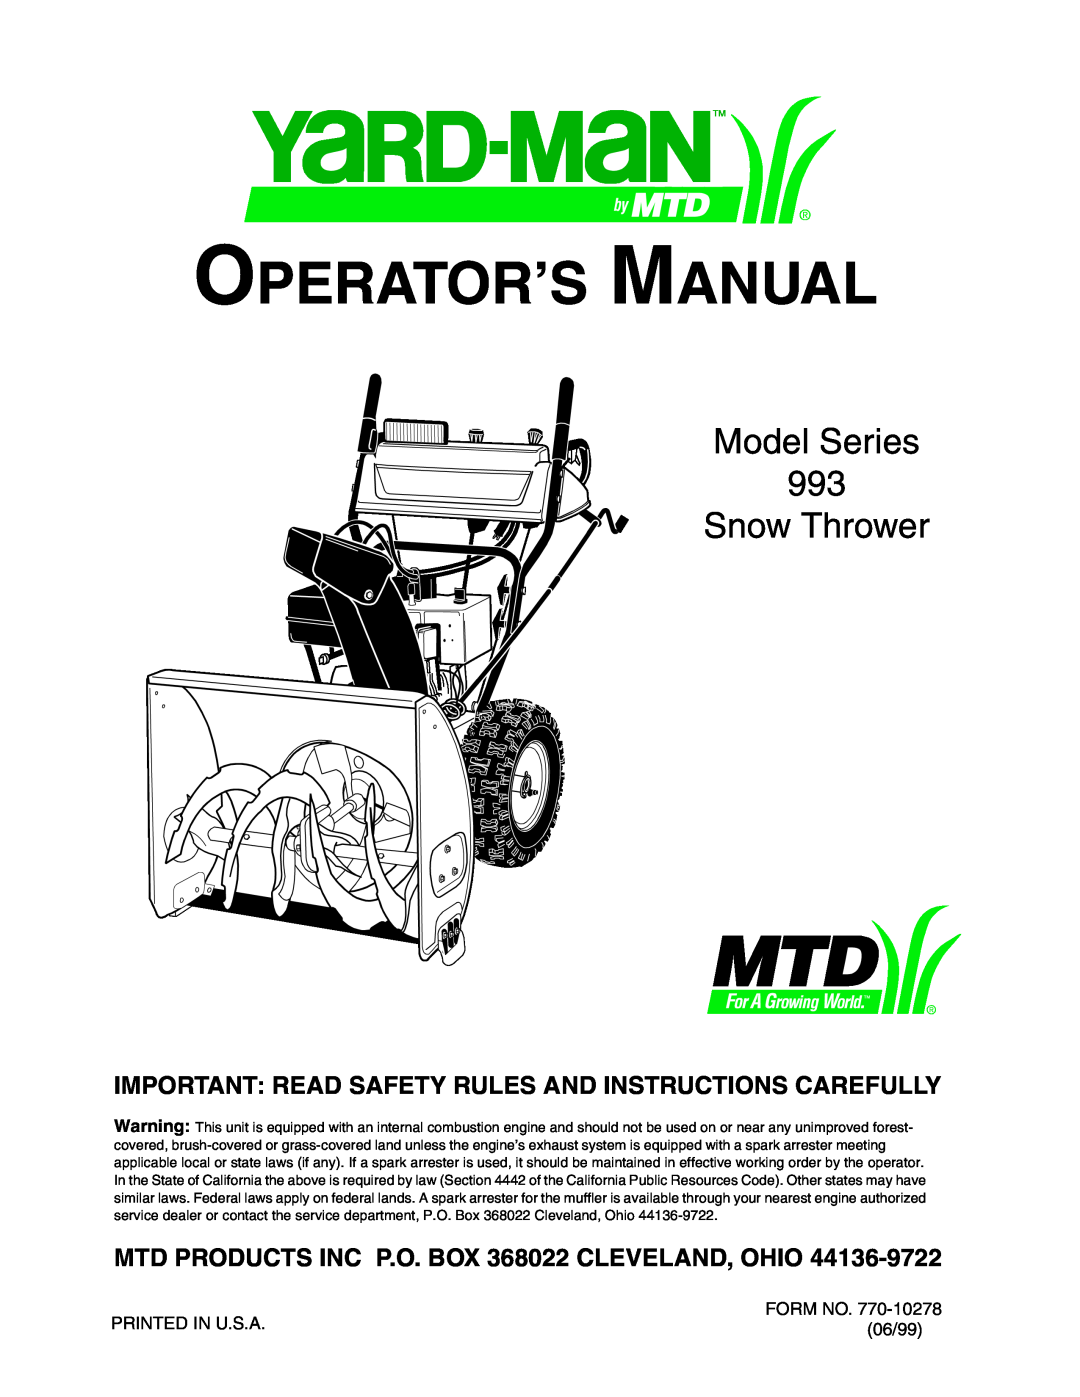 MTD manual MTD PRODUCTS INC P.O. BOX 368022 CLEVELAND, OHIO, Operator’S Manual, Model Series 993 Snow Thrower 